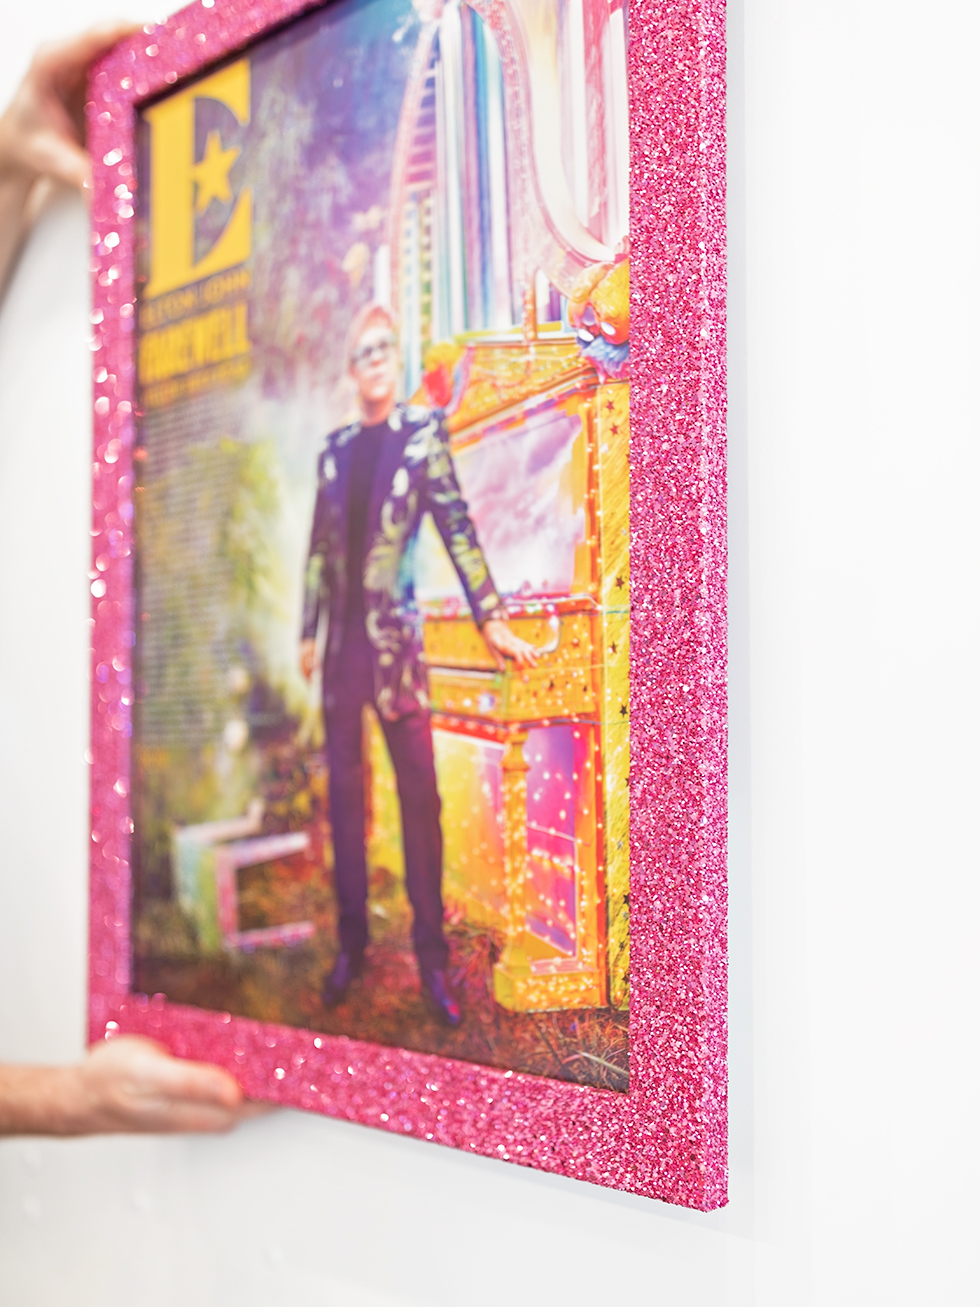 Details of a pink glitter frame on an Elton John Farewell Yellow Brick Road concert poster.